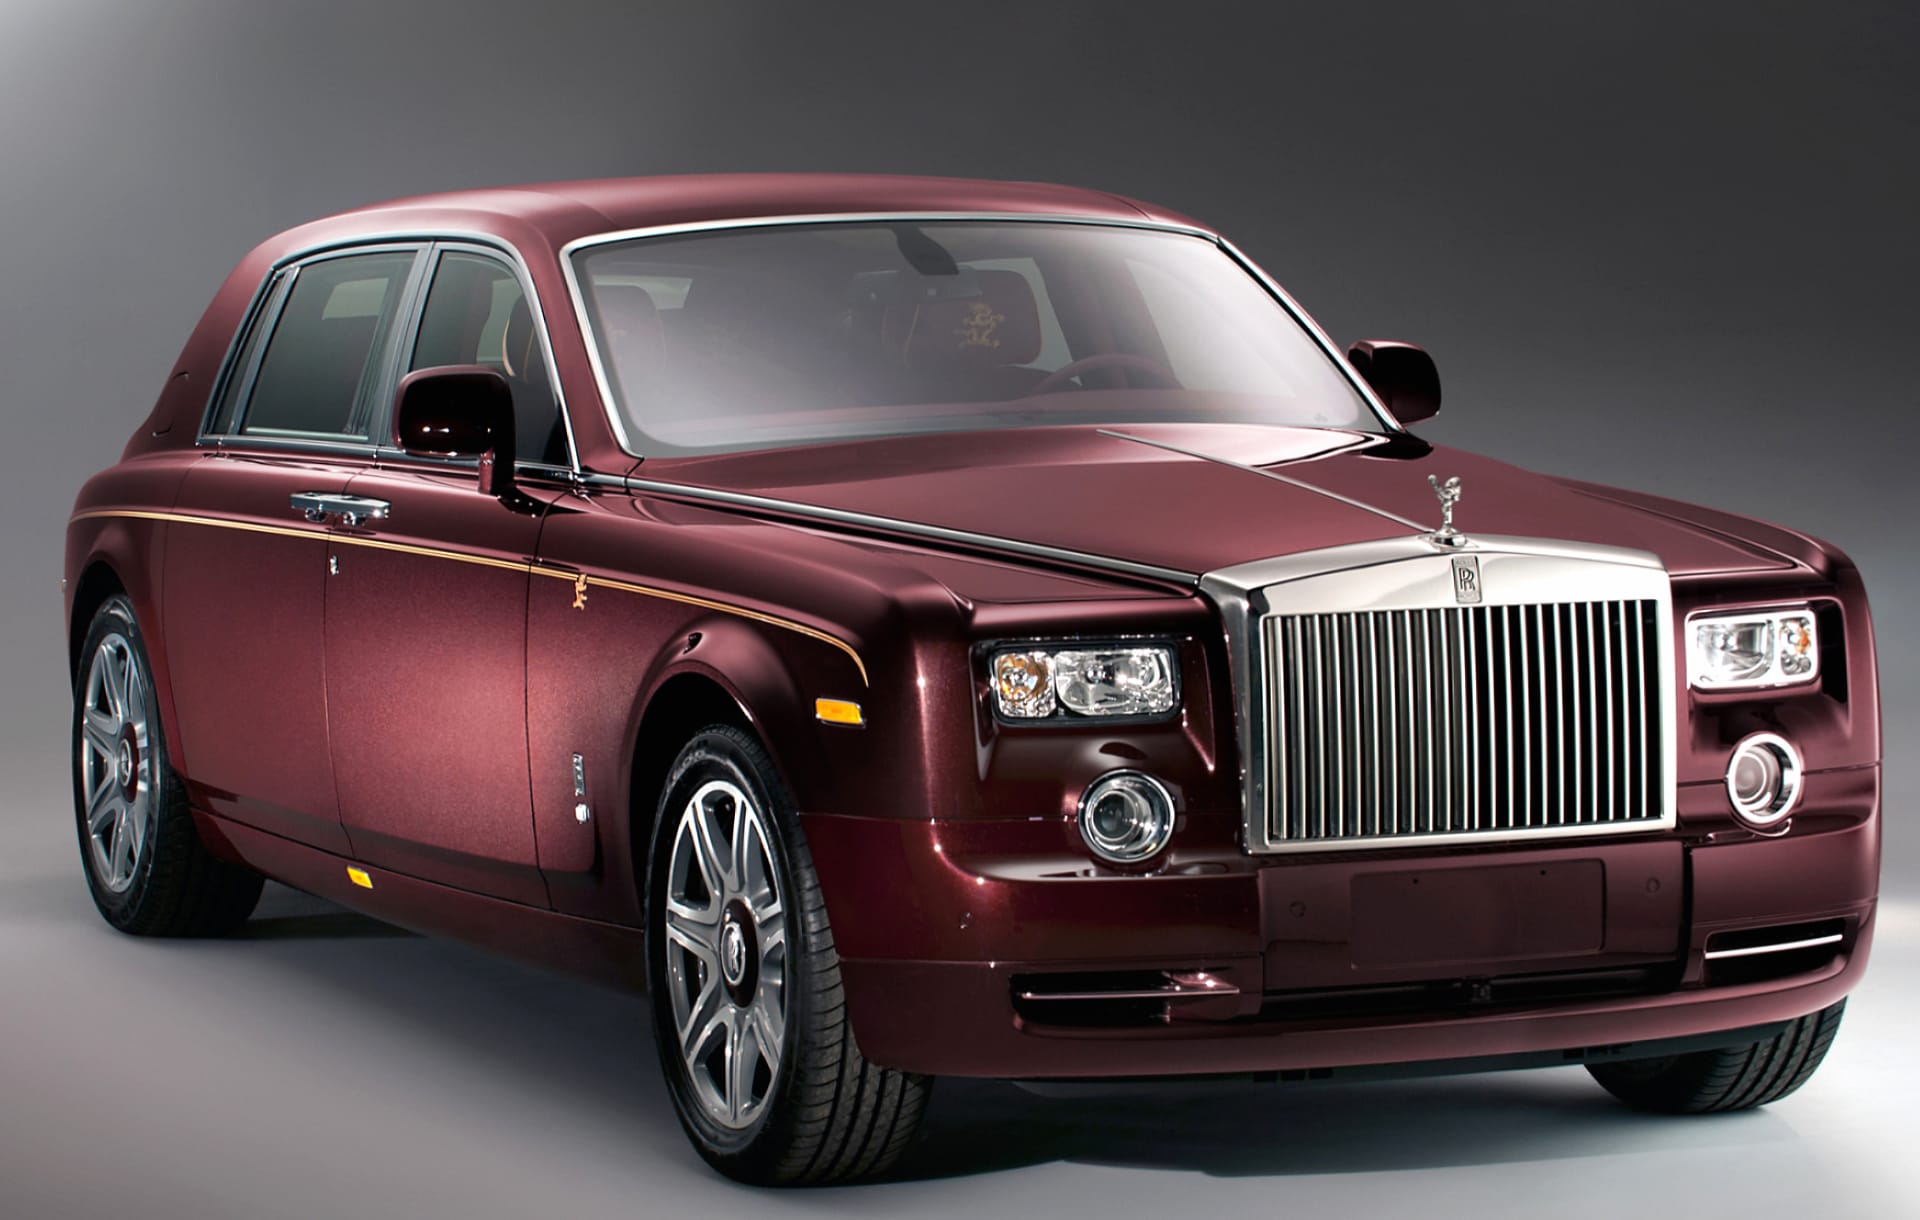 2012 Rolls Royce year Of The Dragon Phantom wallpapers HD quality